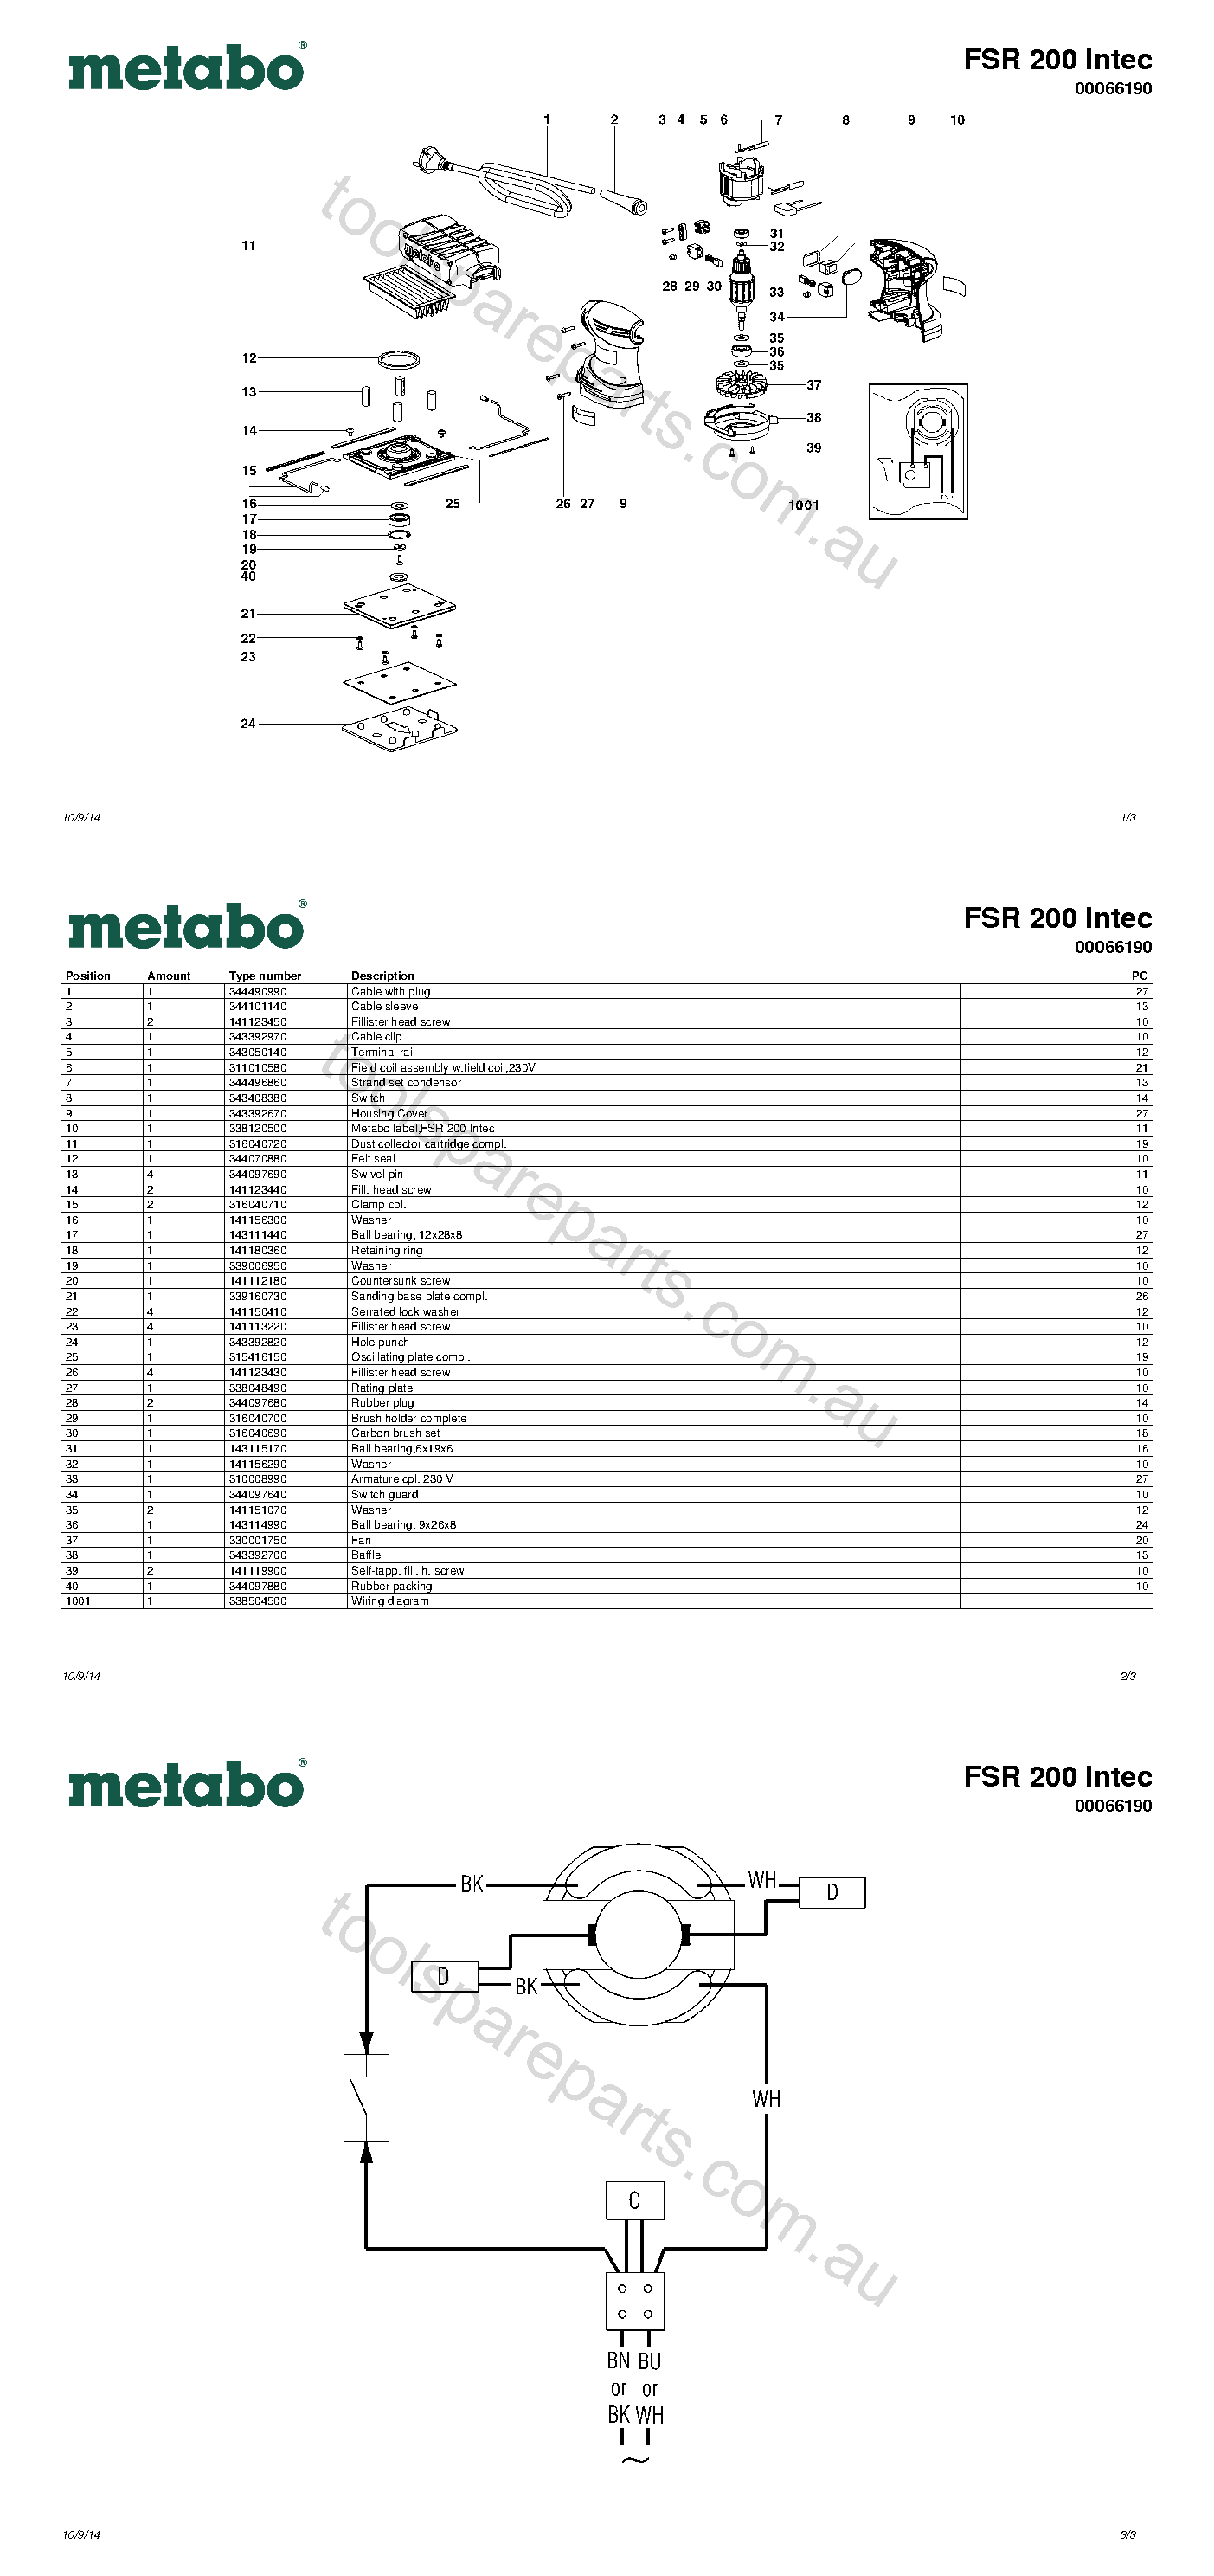 Metabo FSR 200 Intec 00066190  Diagram 1